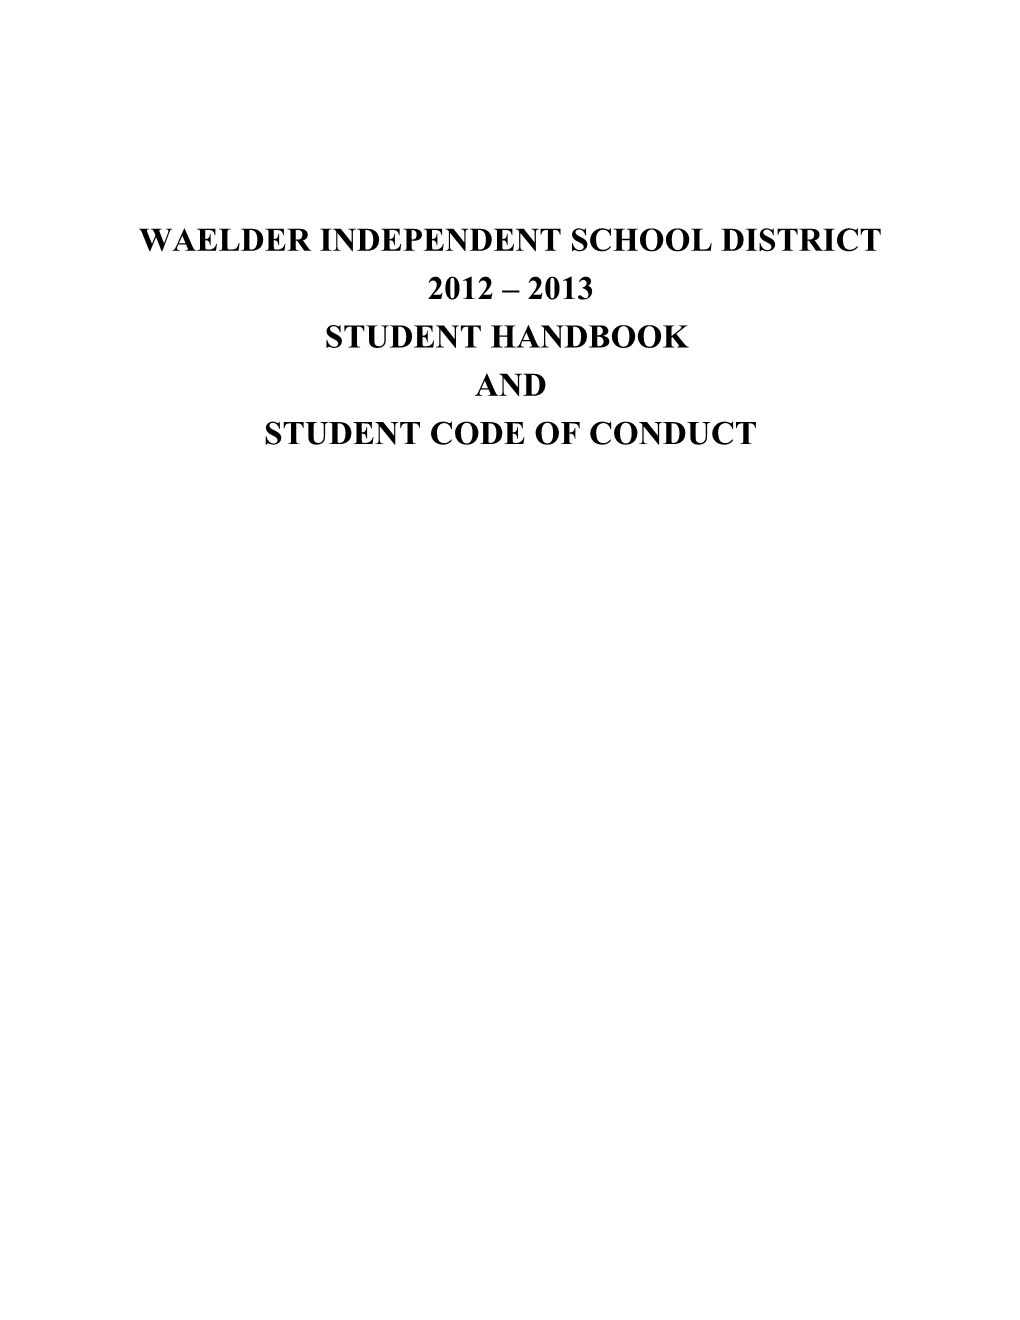 Waelder Independent School District